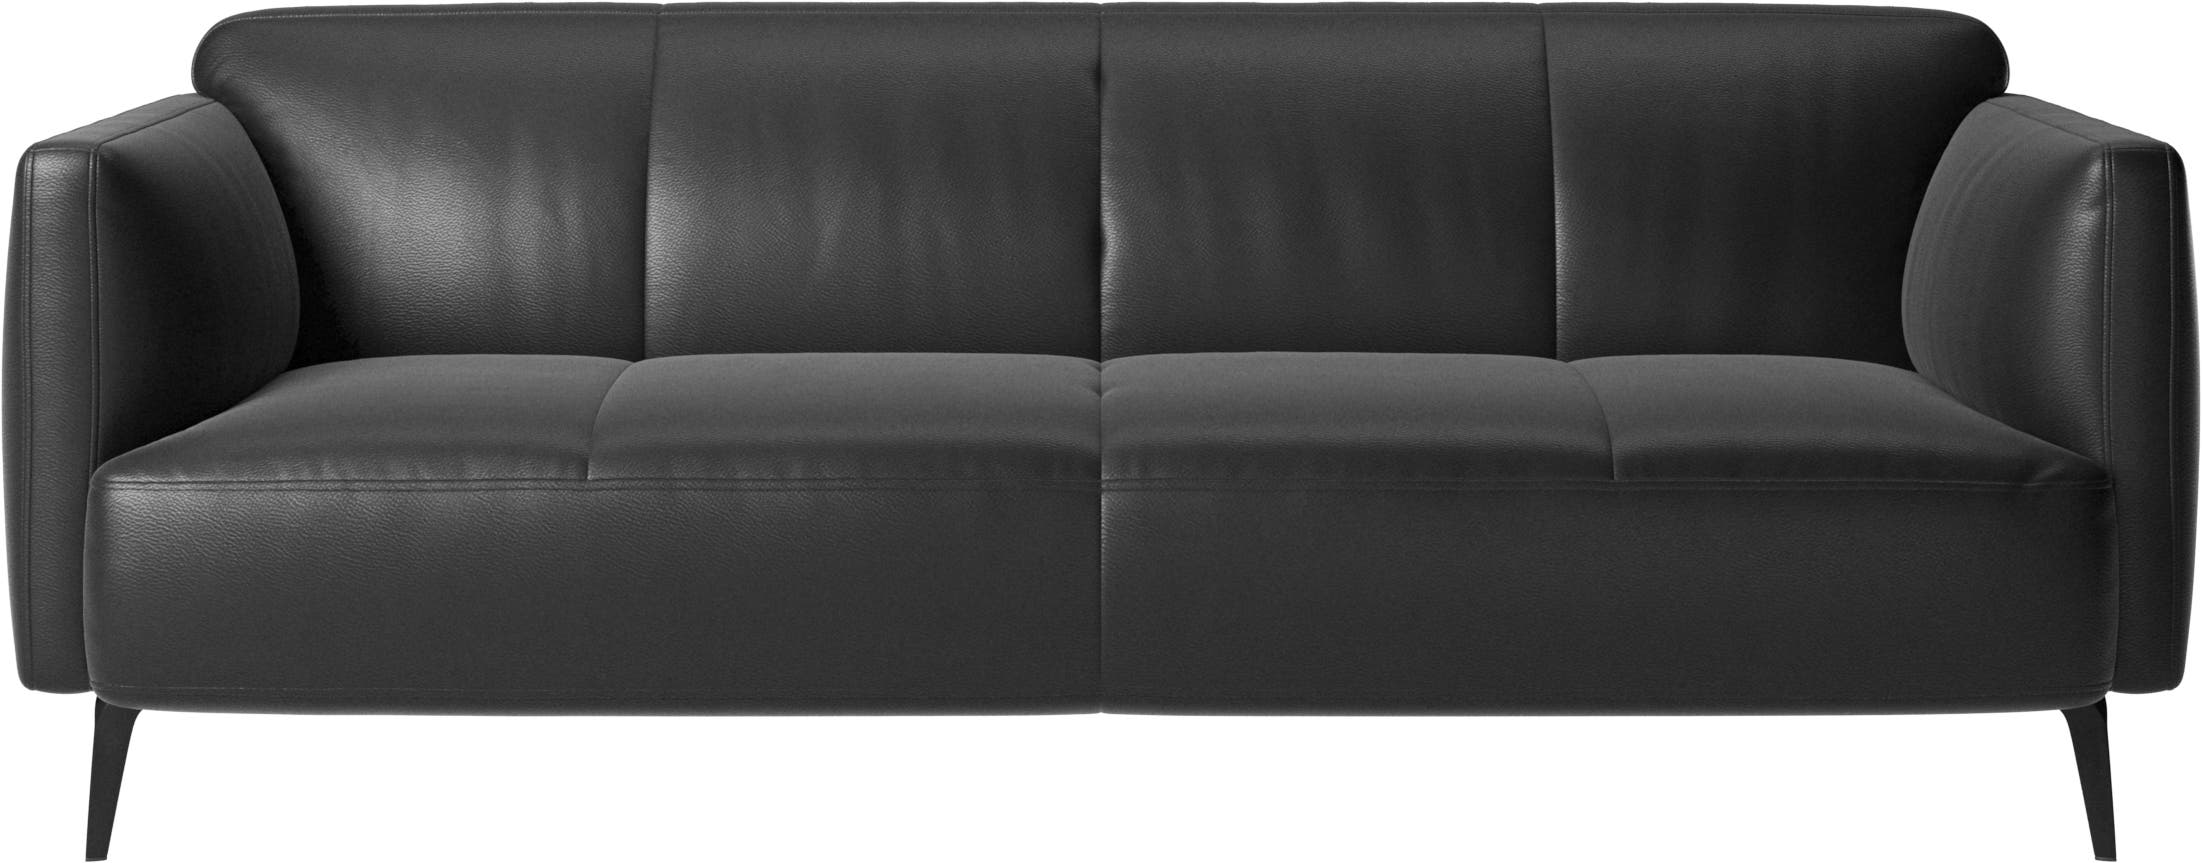 Modena 2½ pers. sofa